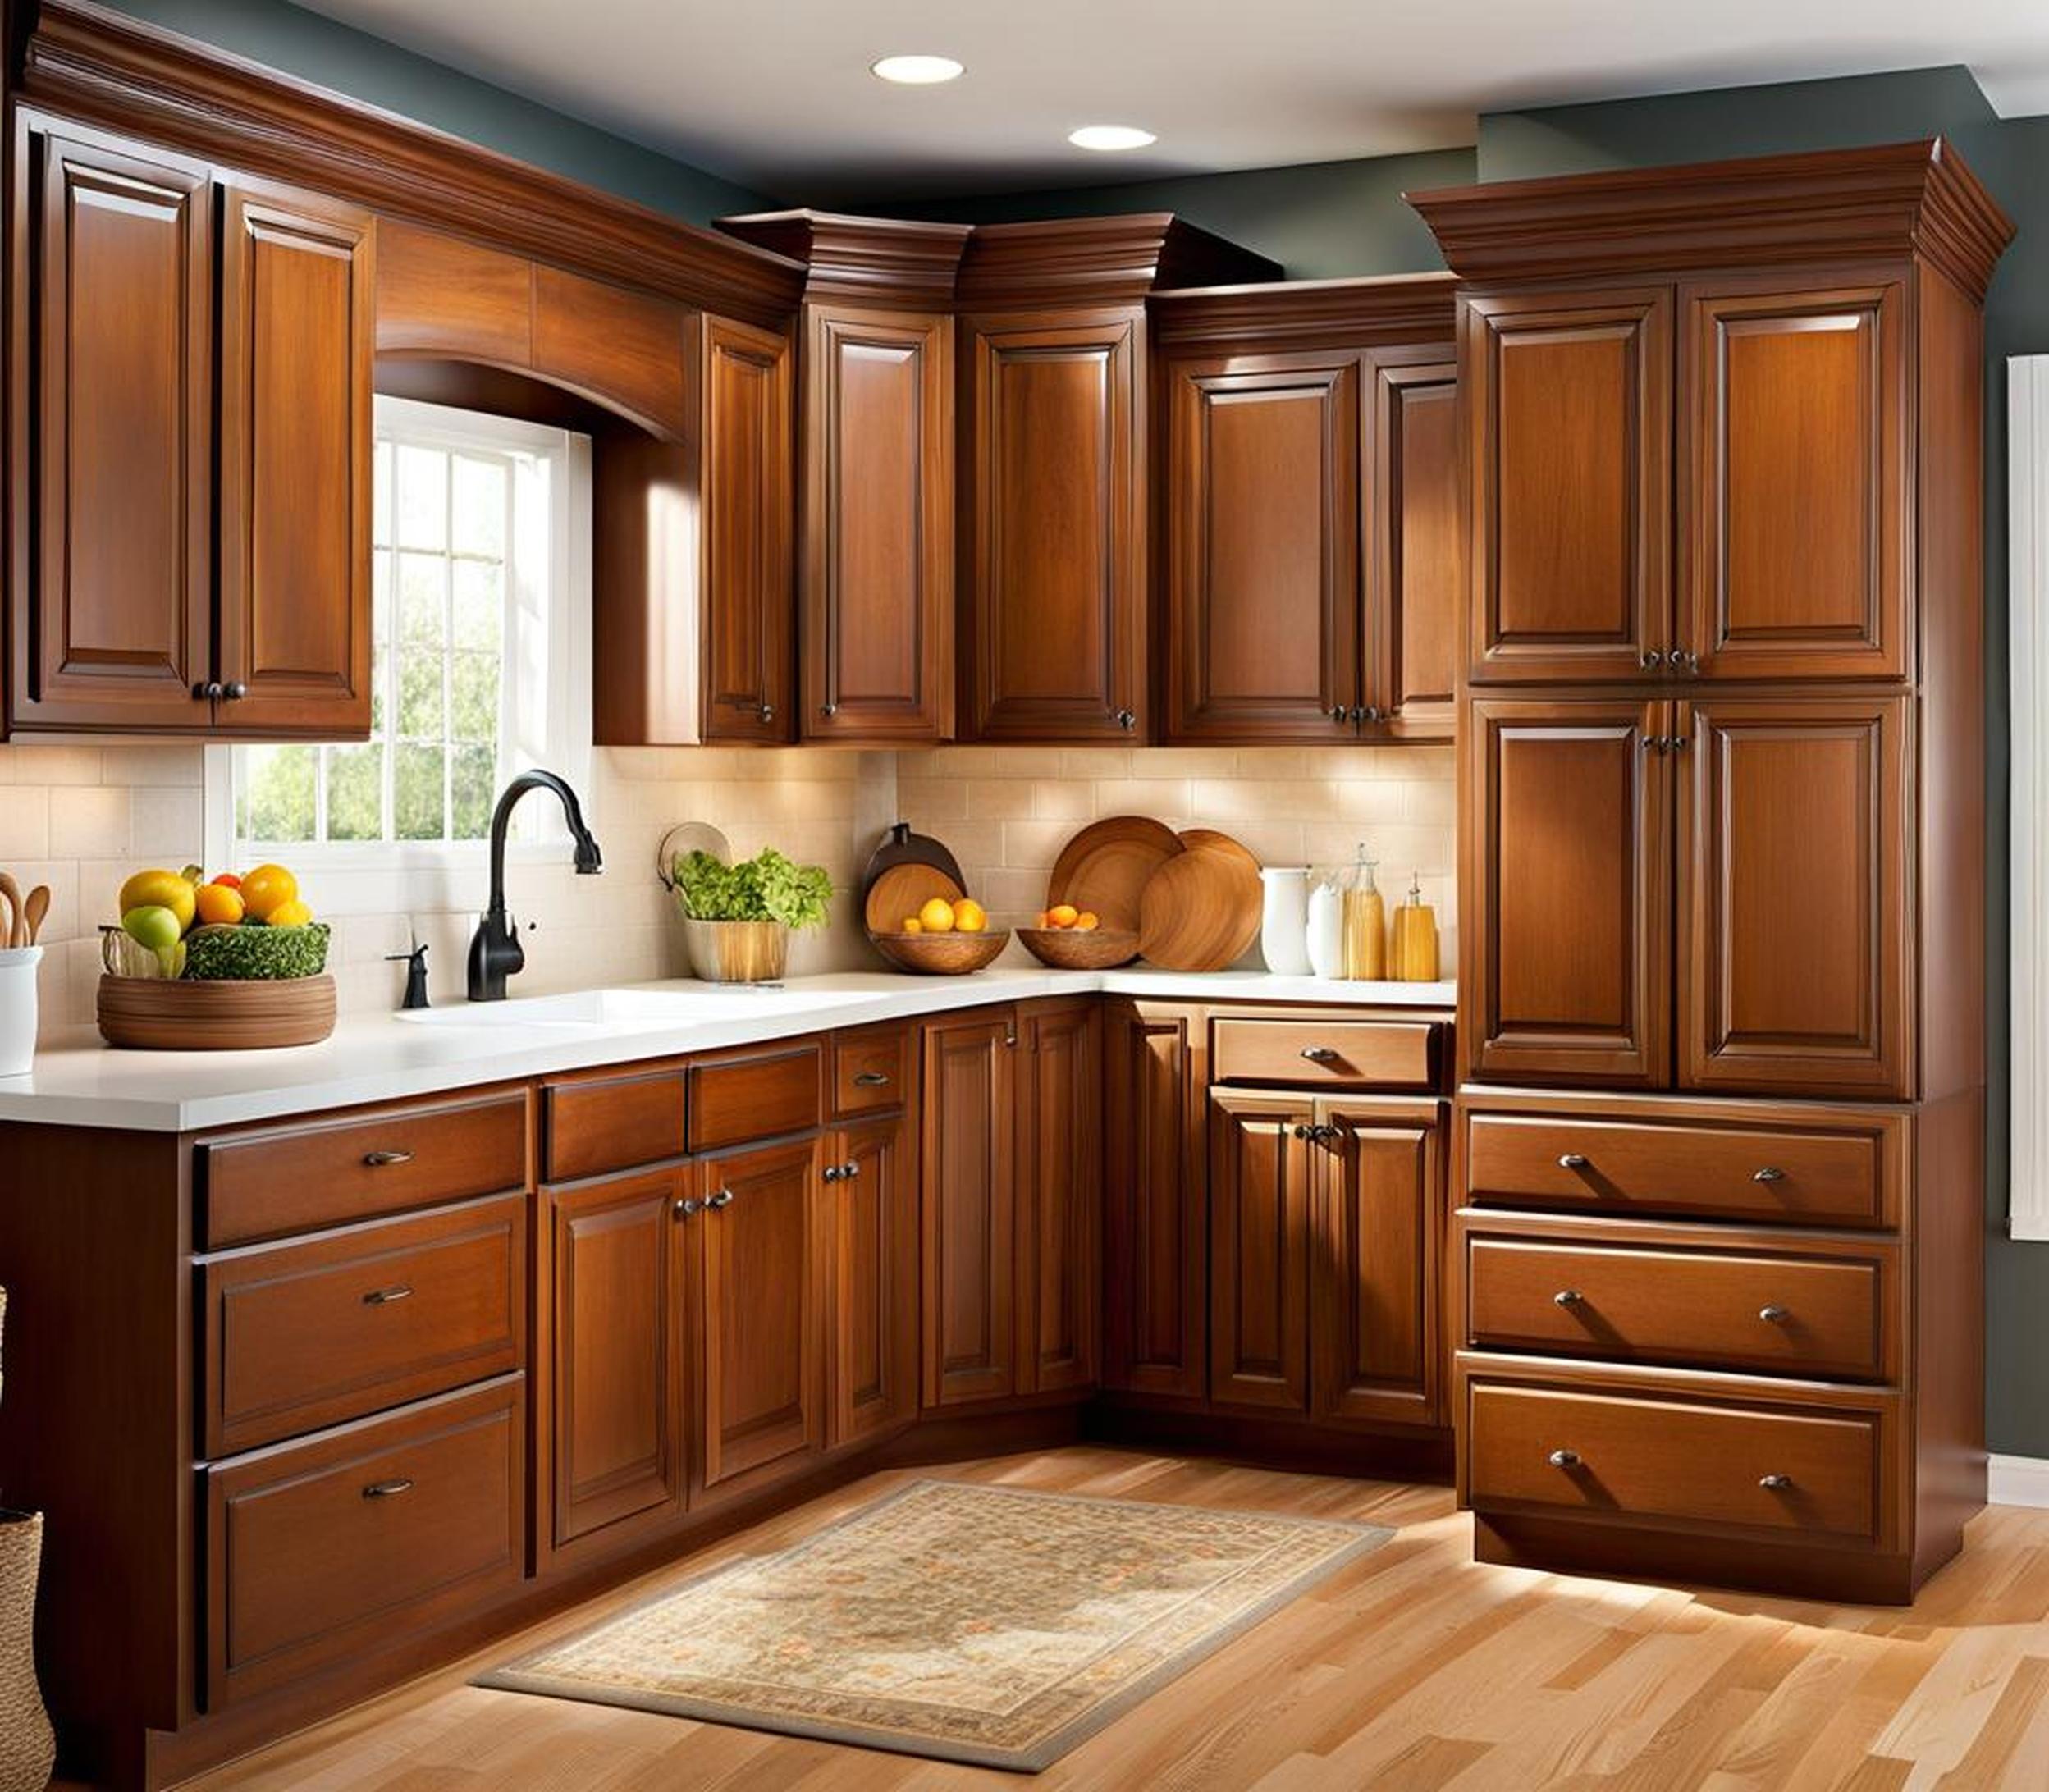 refinish kitchen cabinets ideas